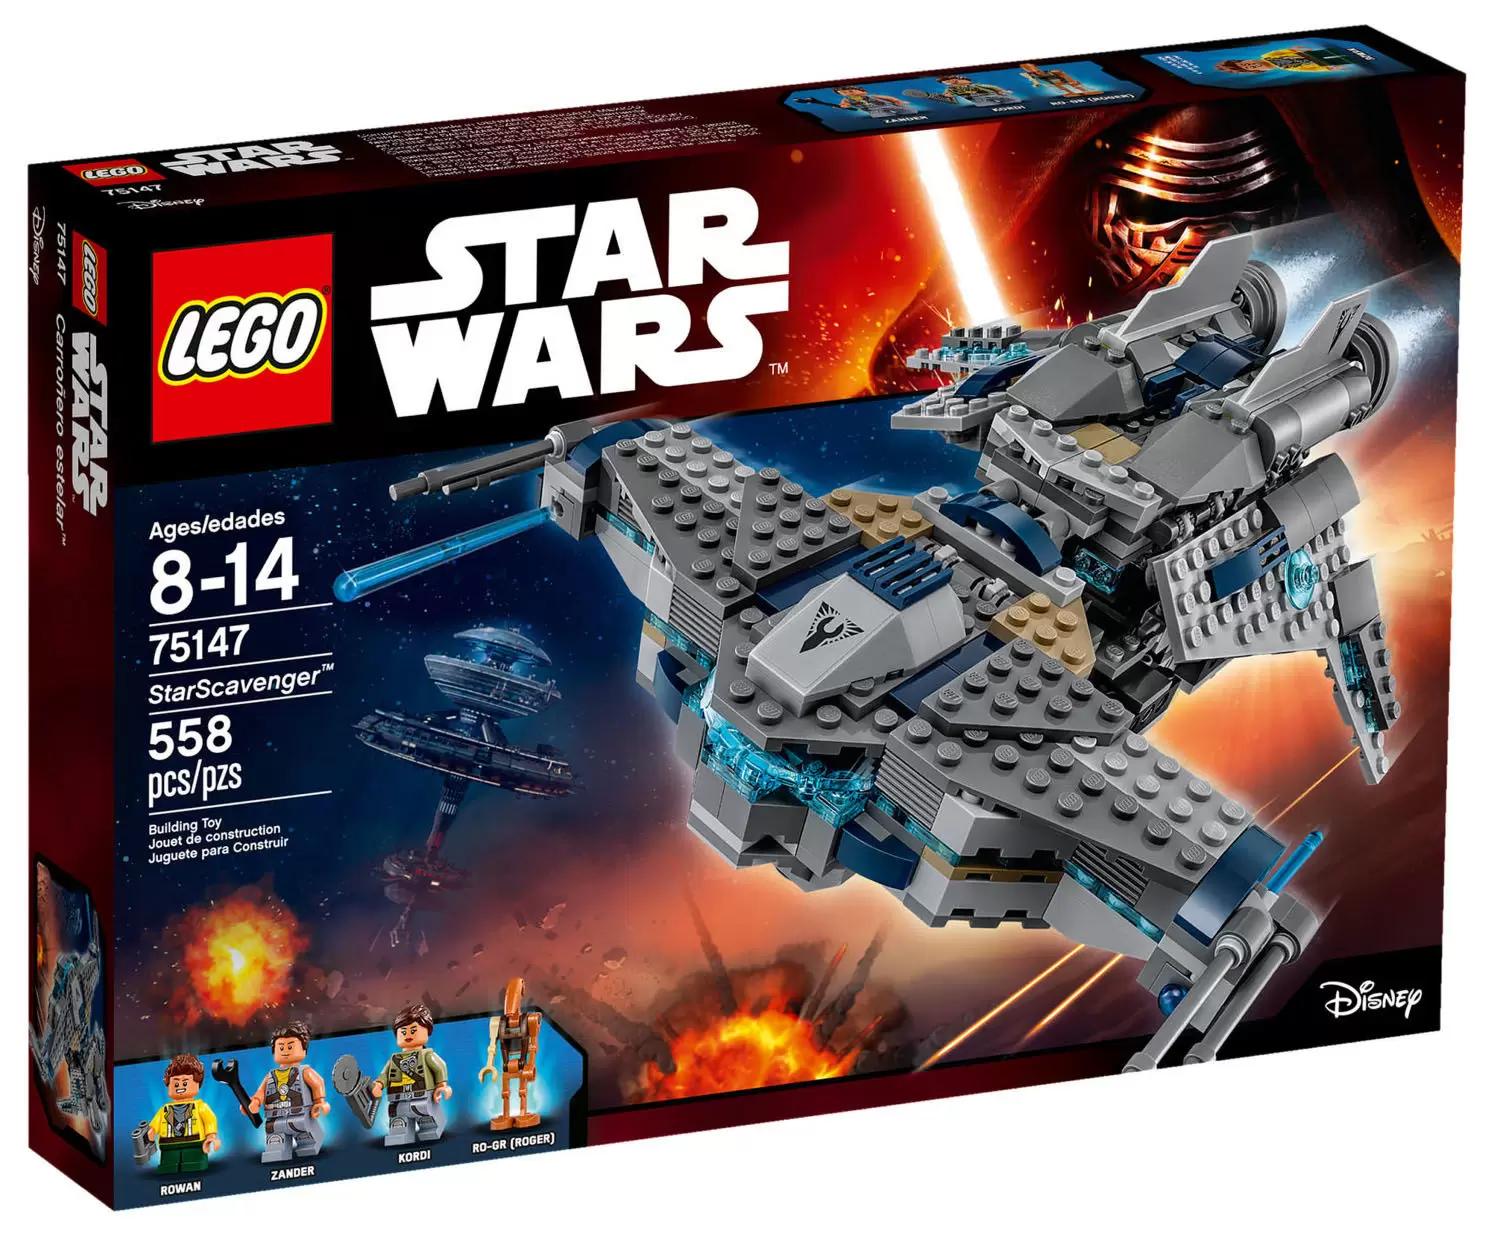 LEGO Star Wars - Star Scavenger